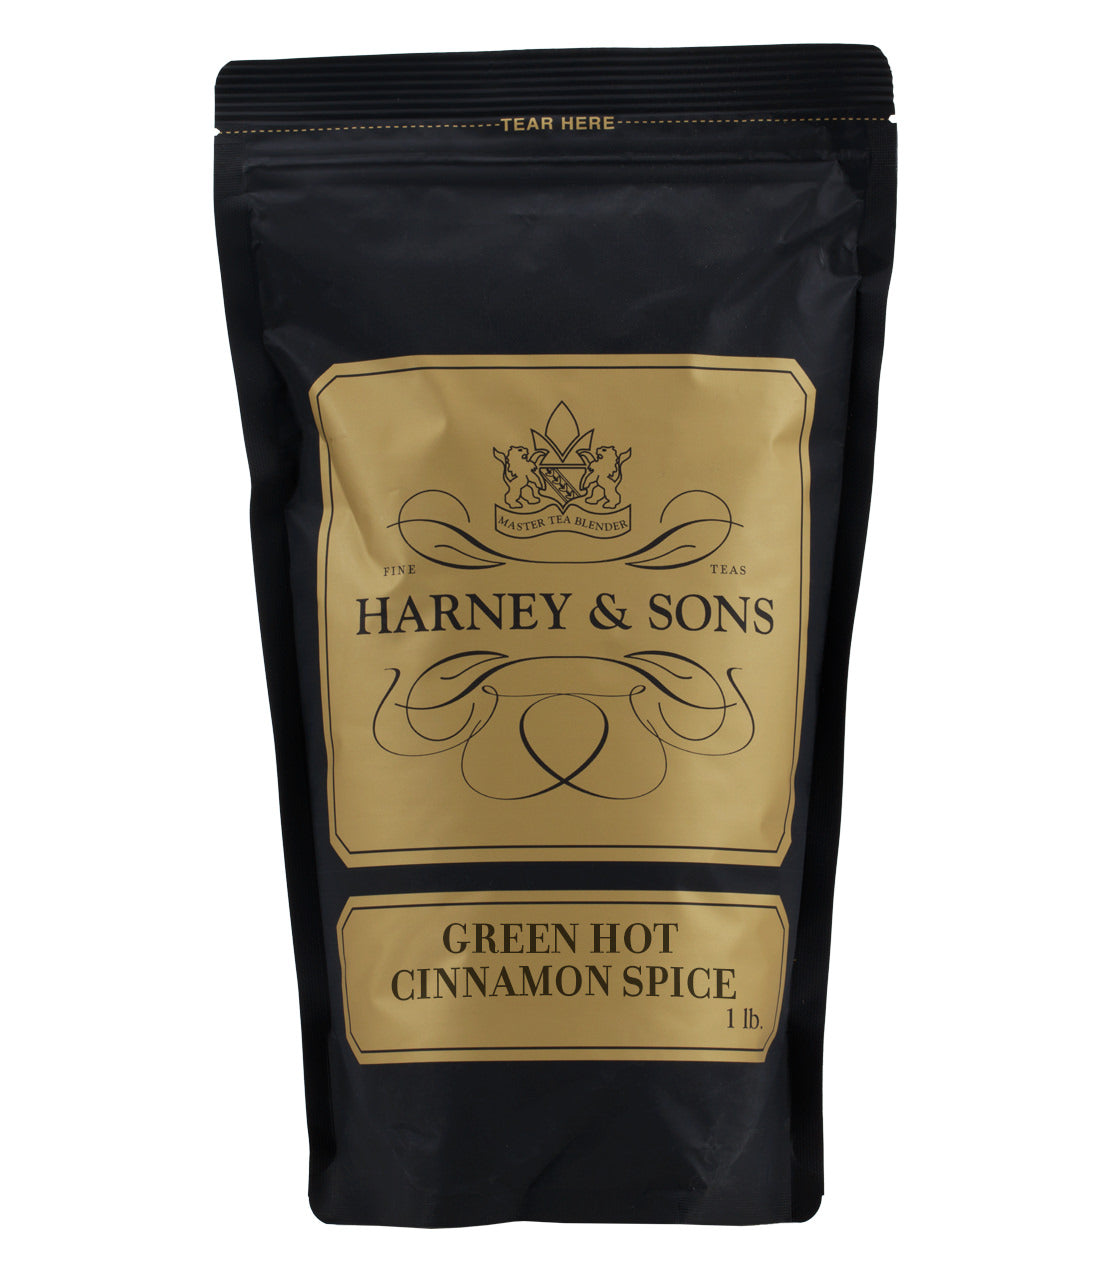 Green Hot Cinnamon Spice - Loose 1 lb. Bag - Harney & Sons Fine Teas